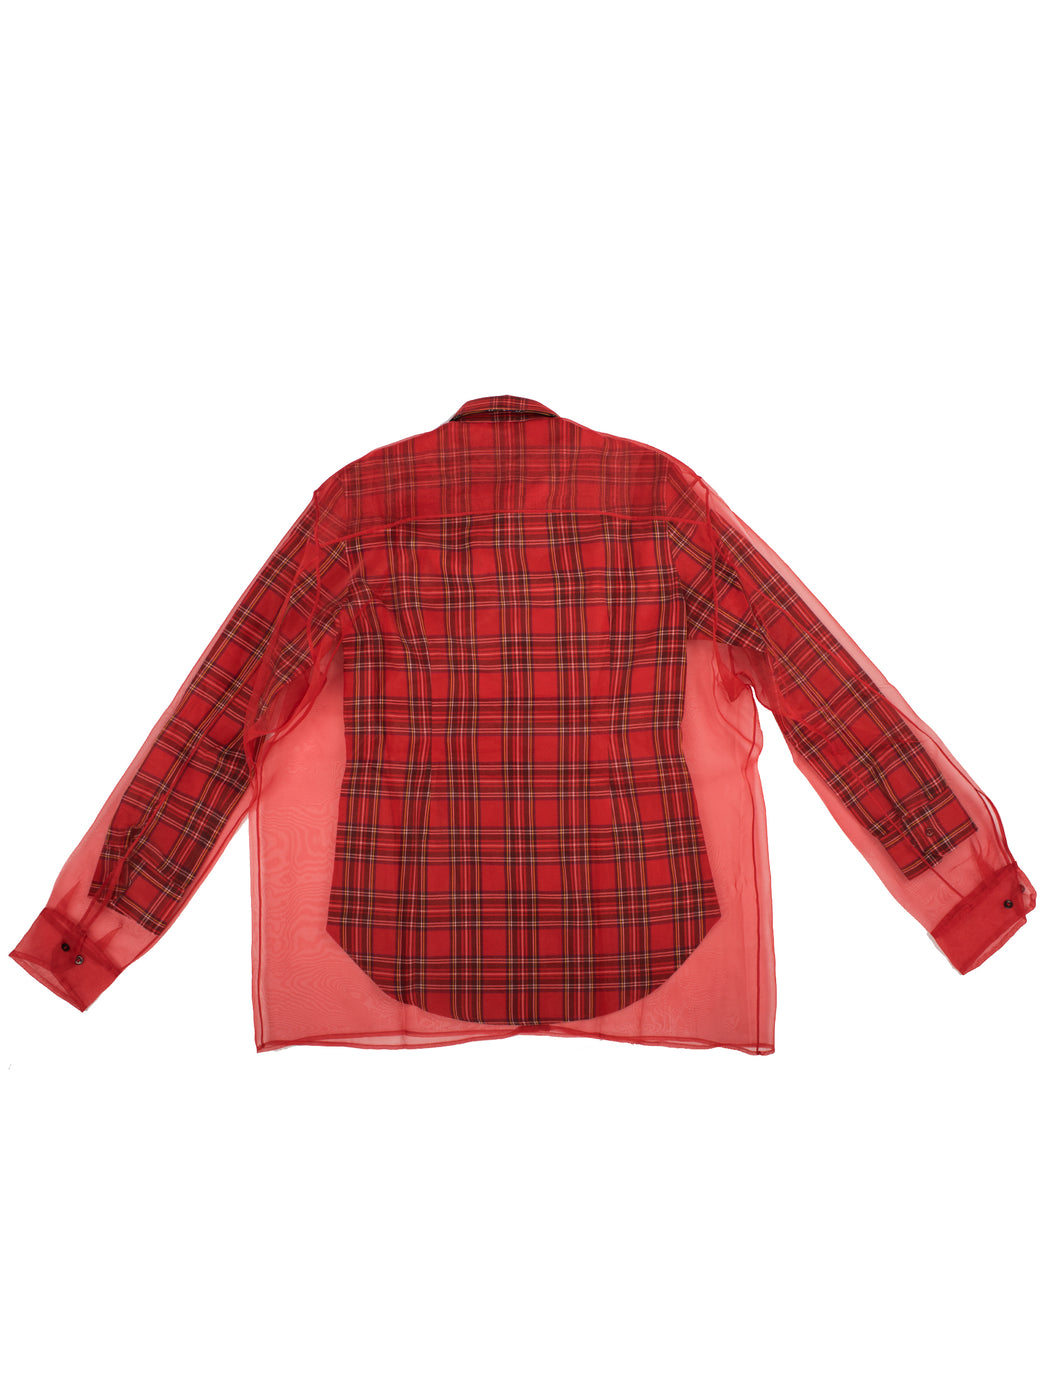 Organza Shirt - Red/Plaid